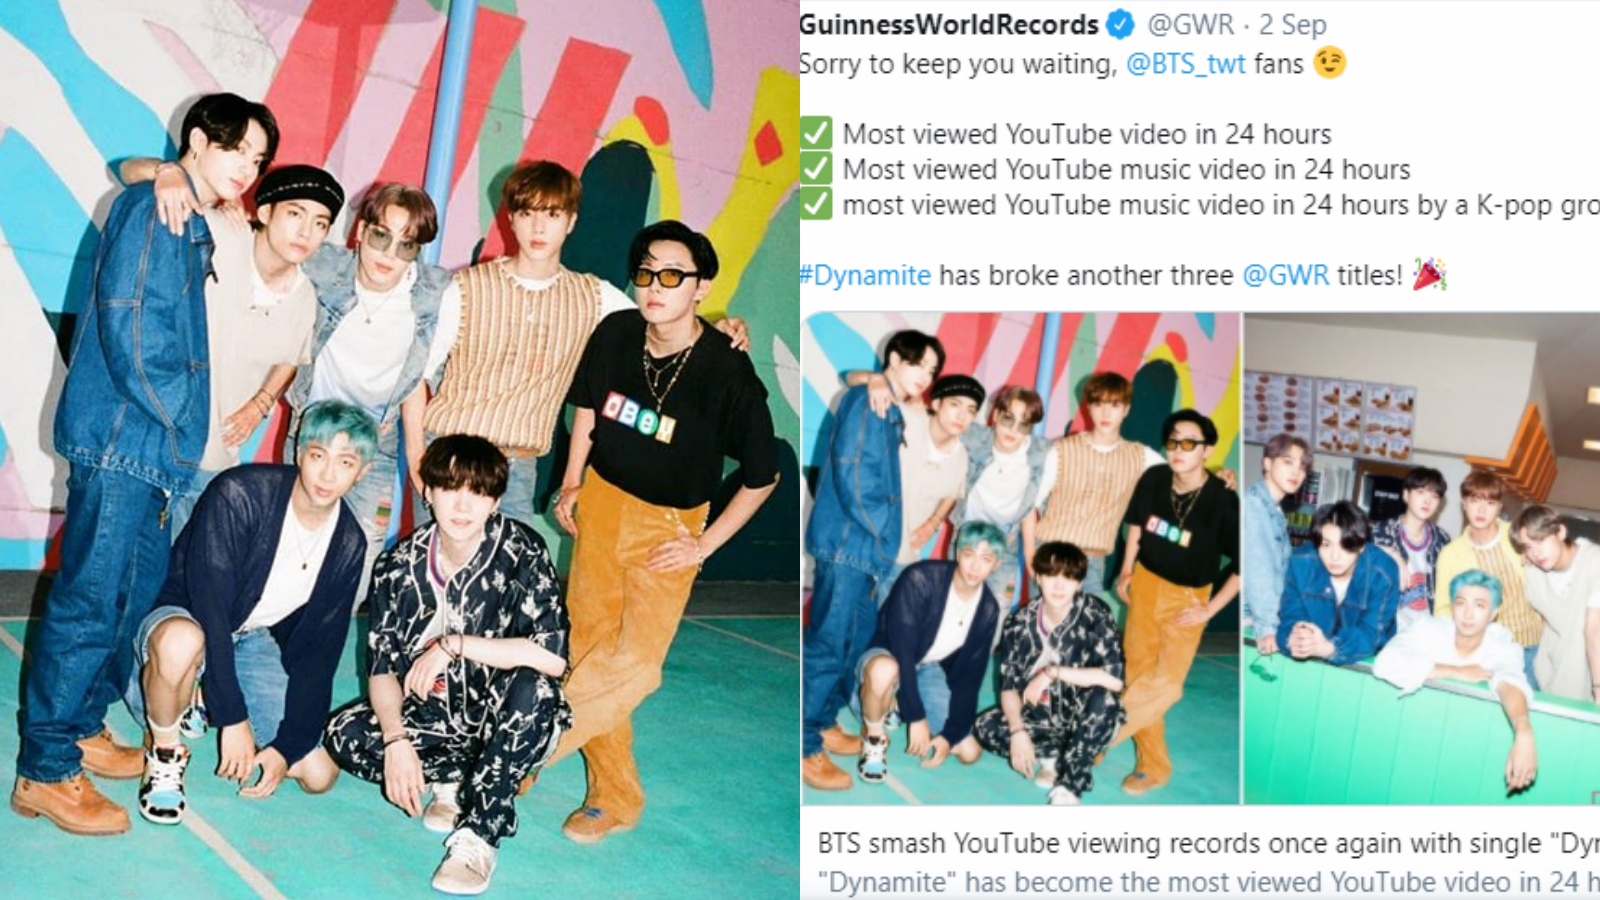 BTS Pecahkan 3 Rekor Guinness World Records Lewat Lagu 'Dynamite'